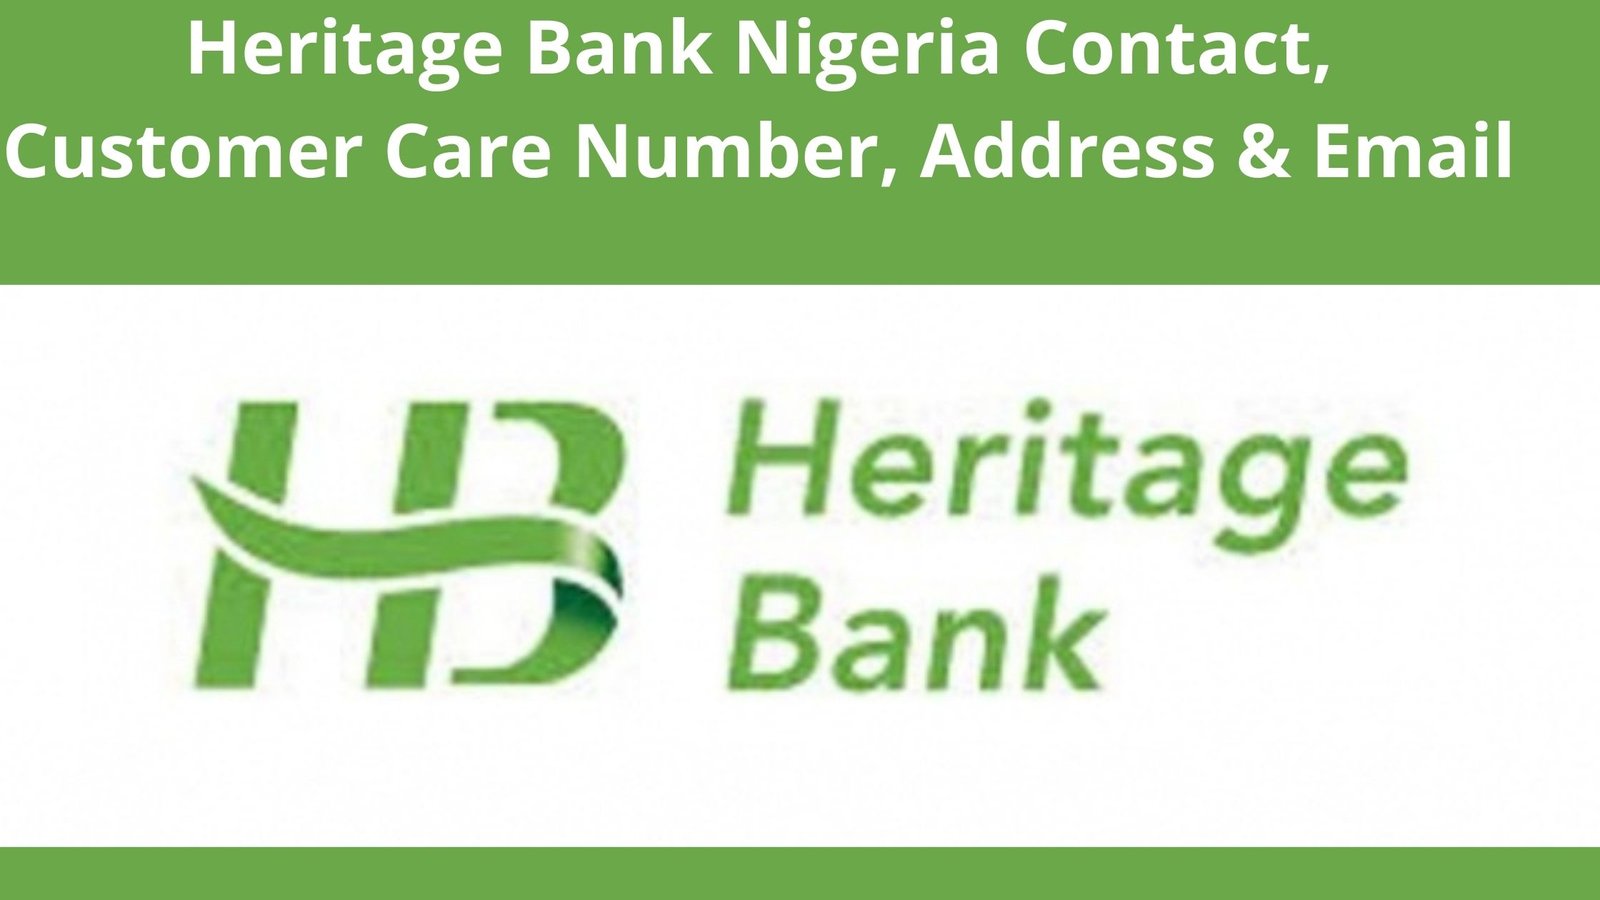 Heritage Bank Nigeria Contact